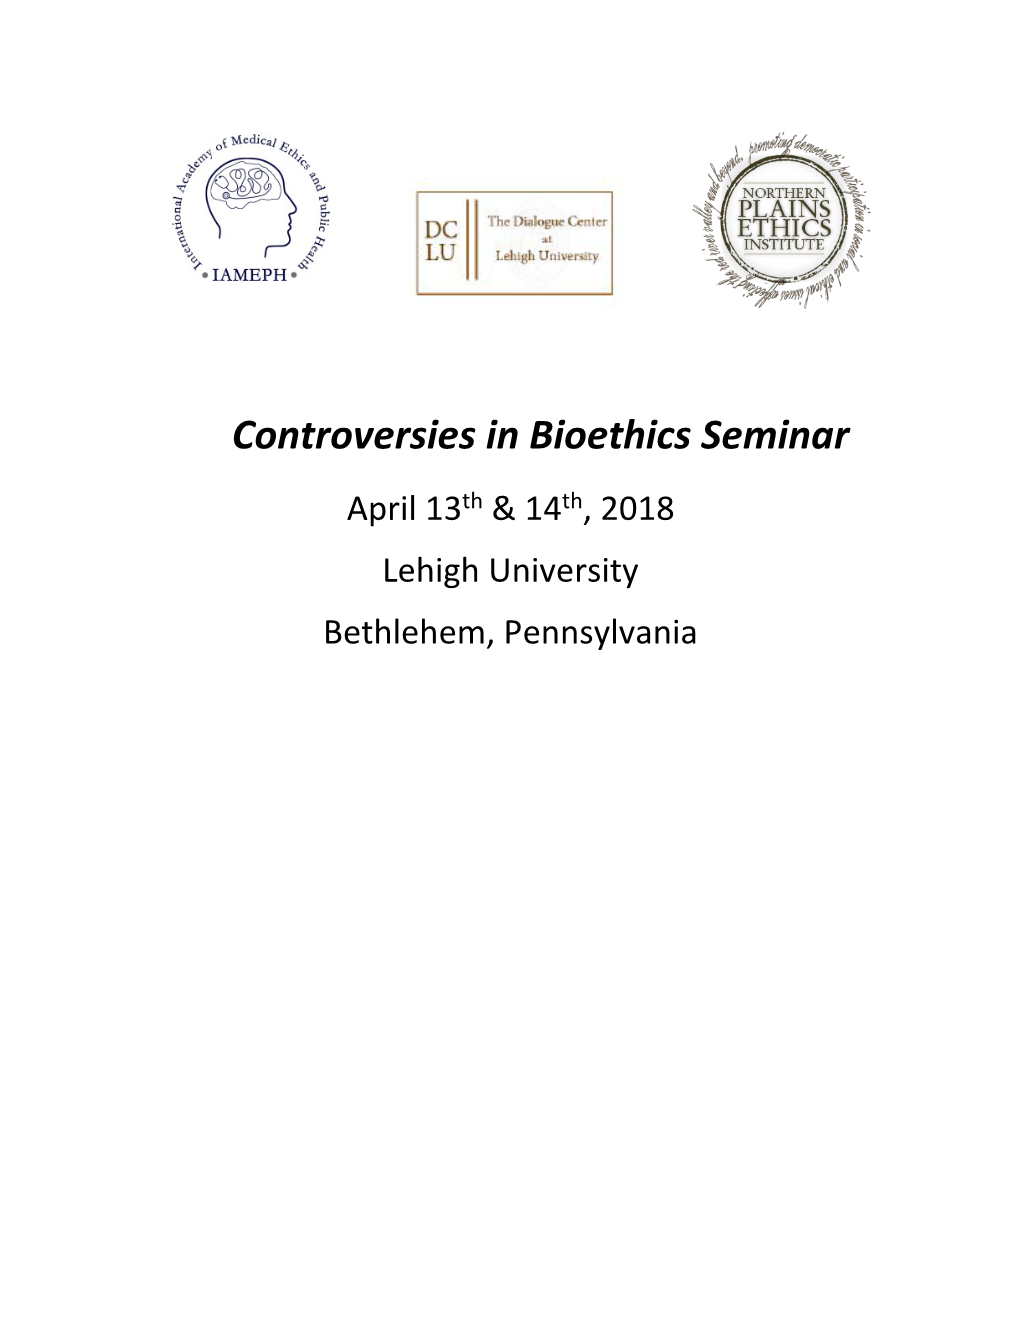 Controversies in Bioethics Seminar April 13Th & 14Th, 2018 Lehigh University Bethlehem, Pennsylvania